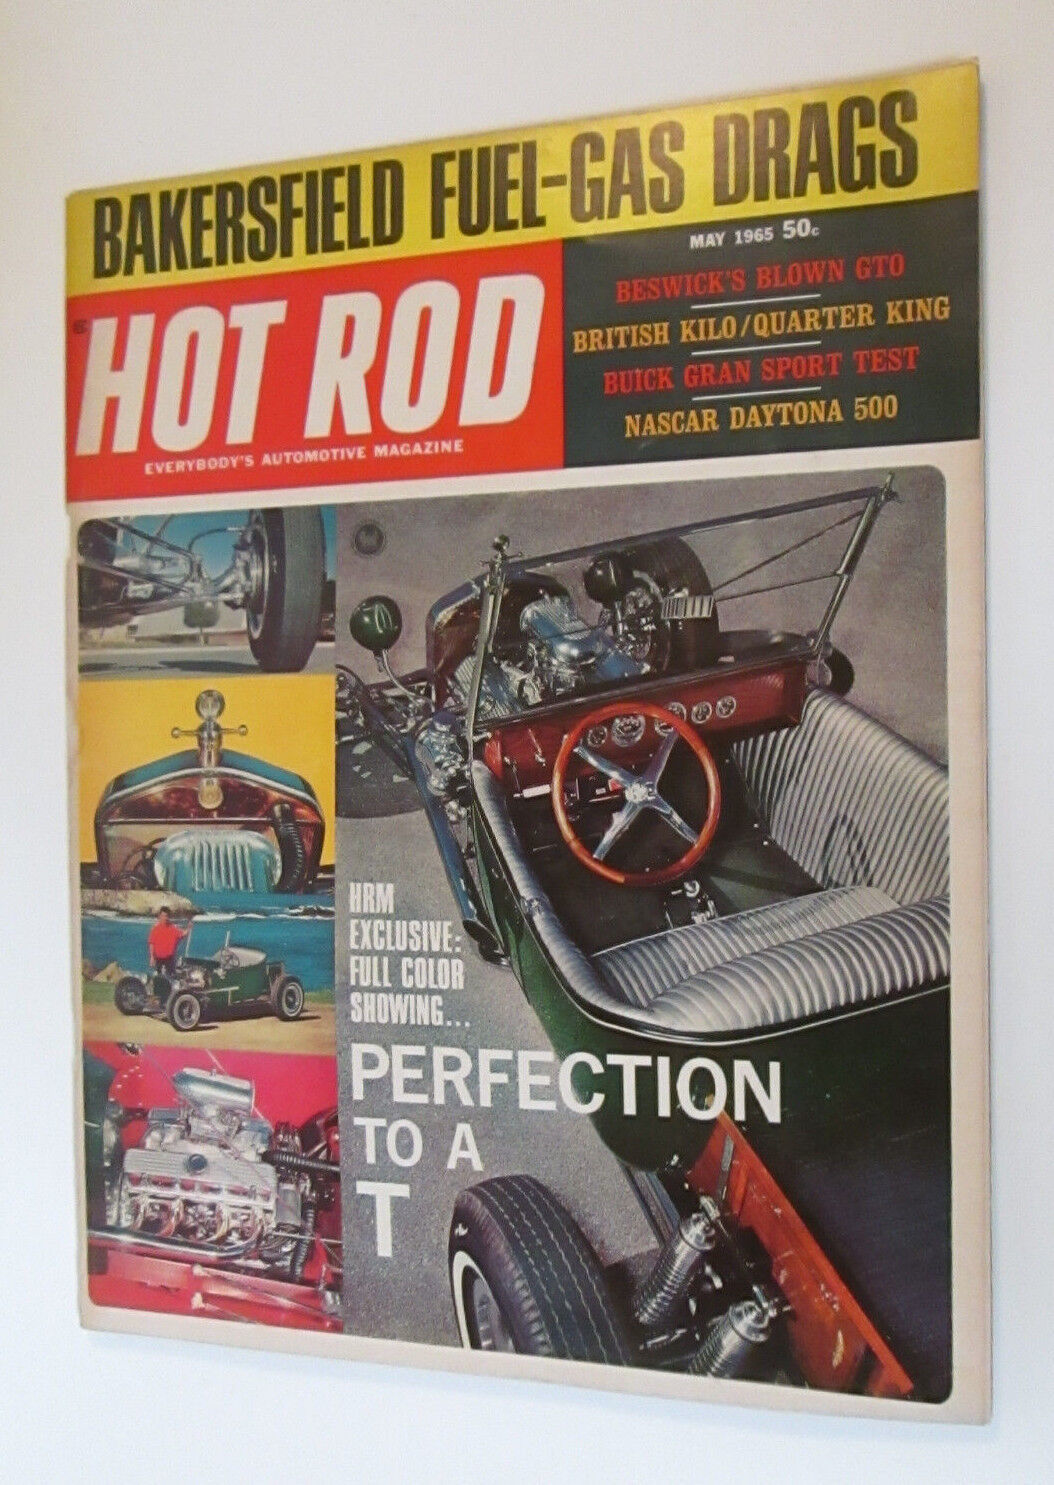  HOT ROD MAGAZINE VINTAGE 1965 MAY CORVETTE GASSER CHEVY FORD MOPAR Cars - $9.00